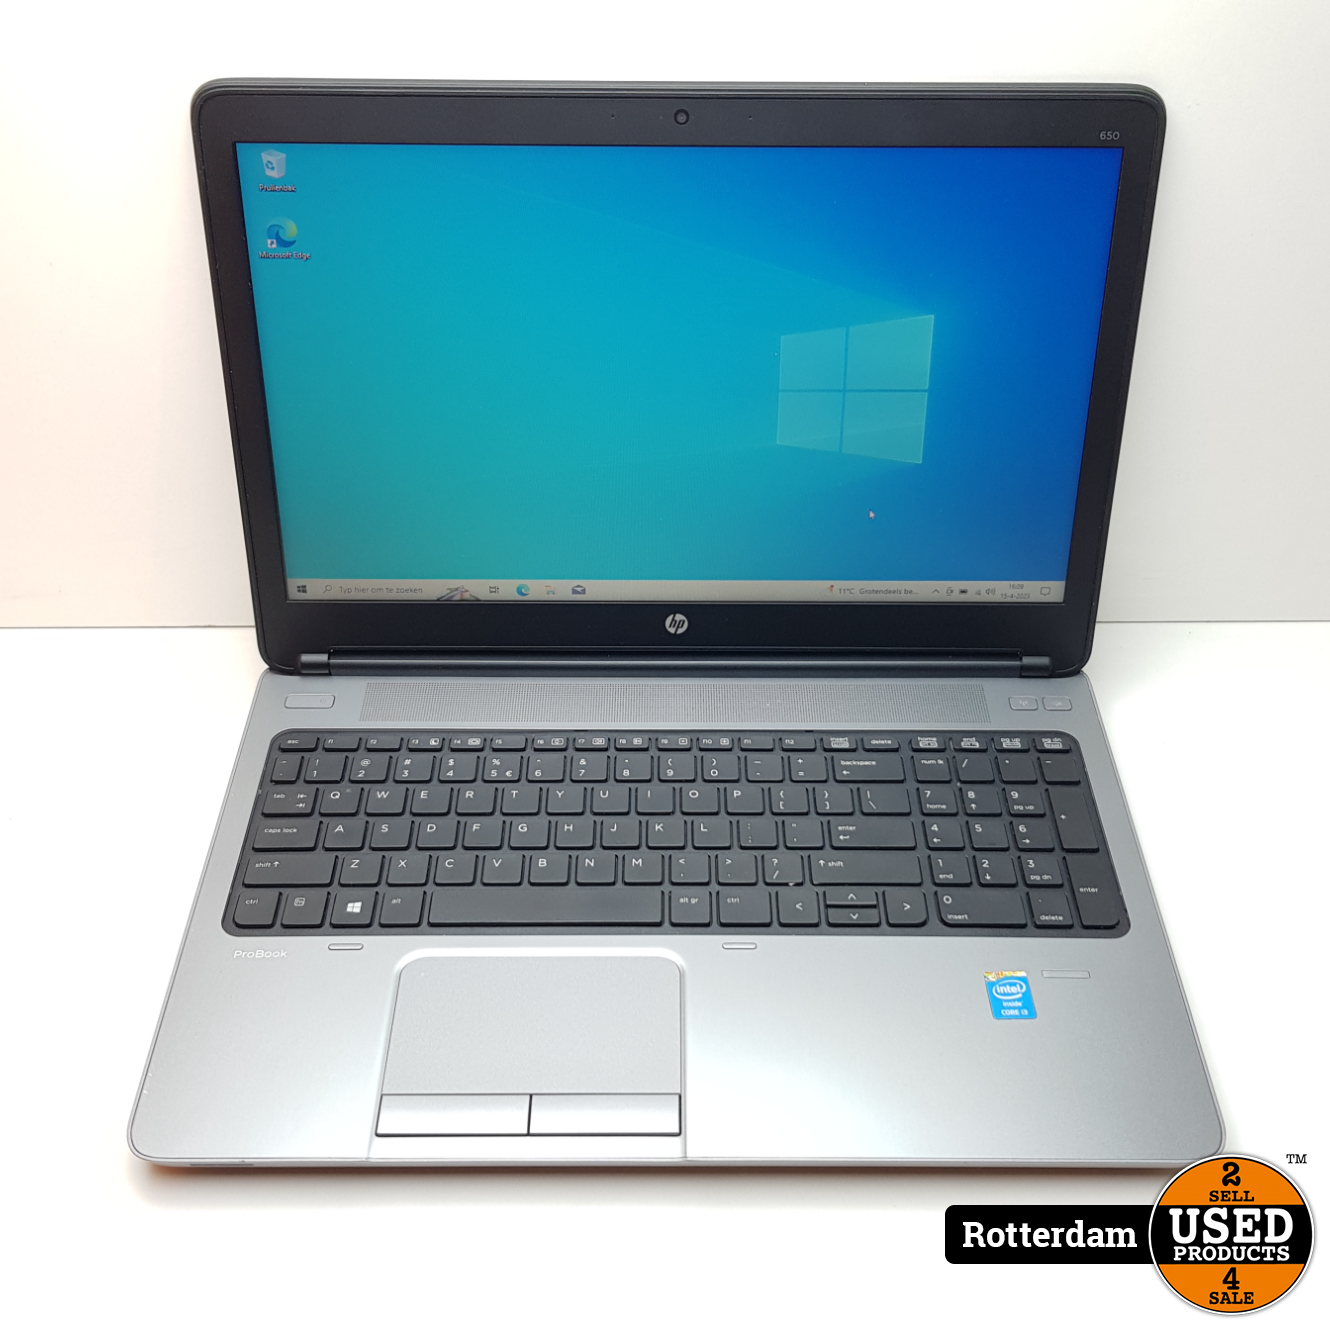 HP ProBook 650 G1 - Met accu! - Used Products